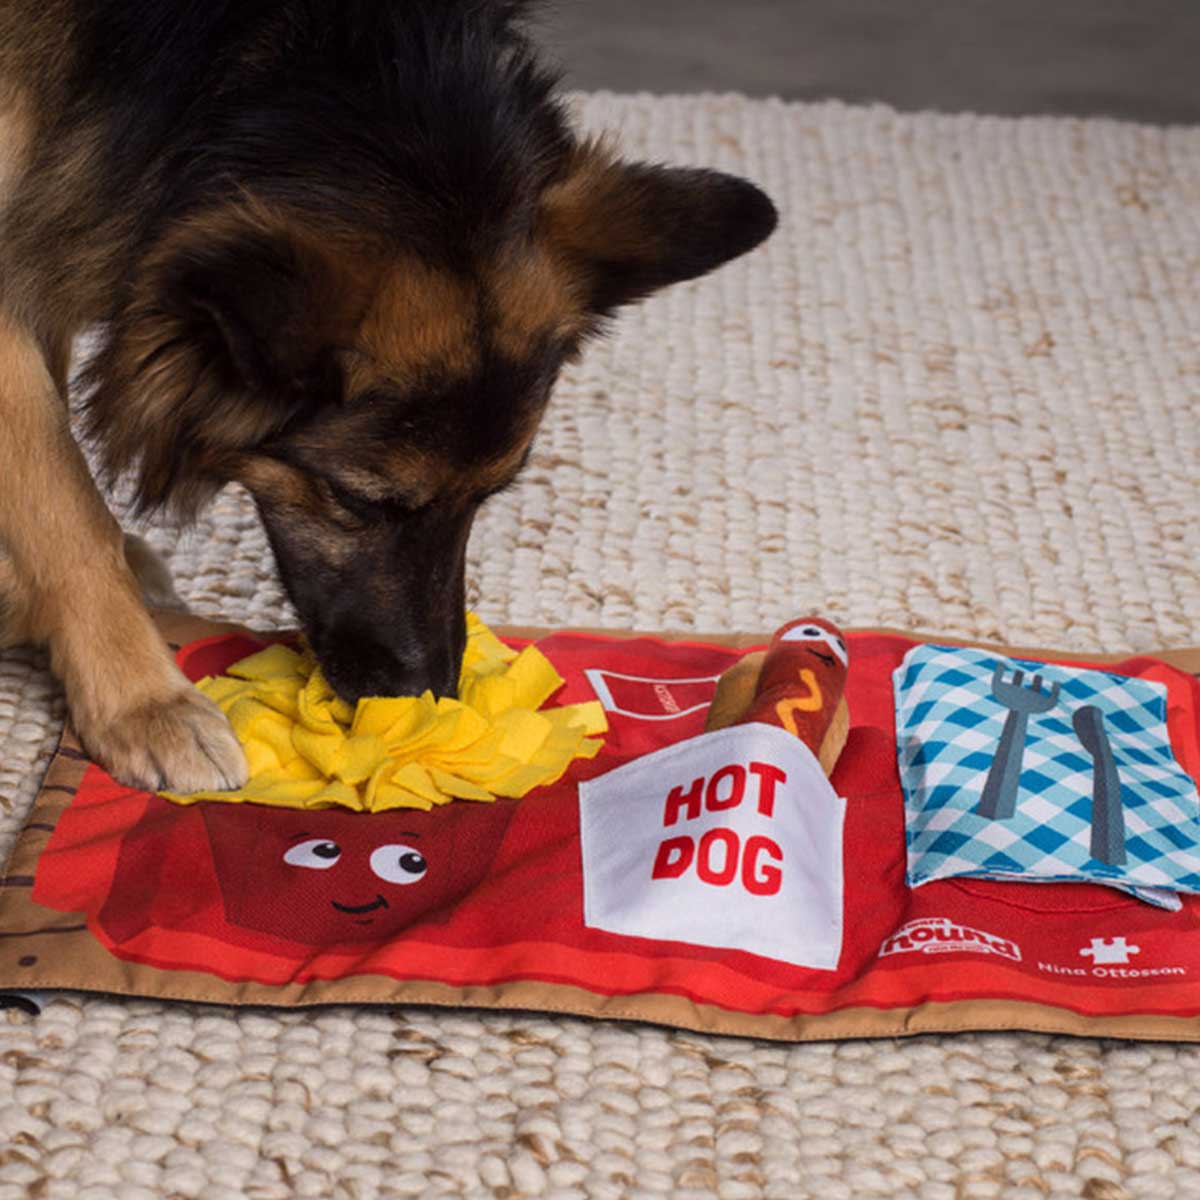 NINA OTTOSSON BY OUTWARD HOUND Spin N' Eat Dog Food Puzzle Feeder